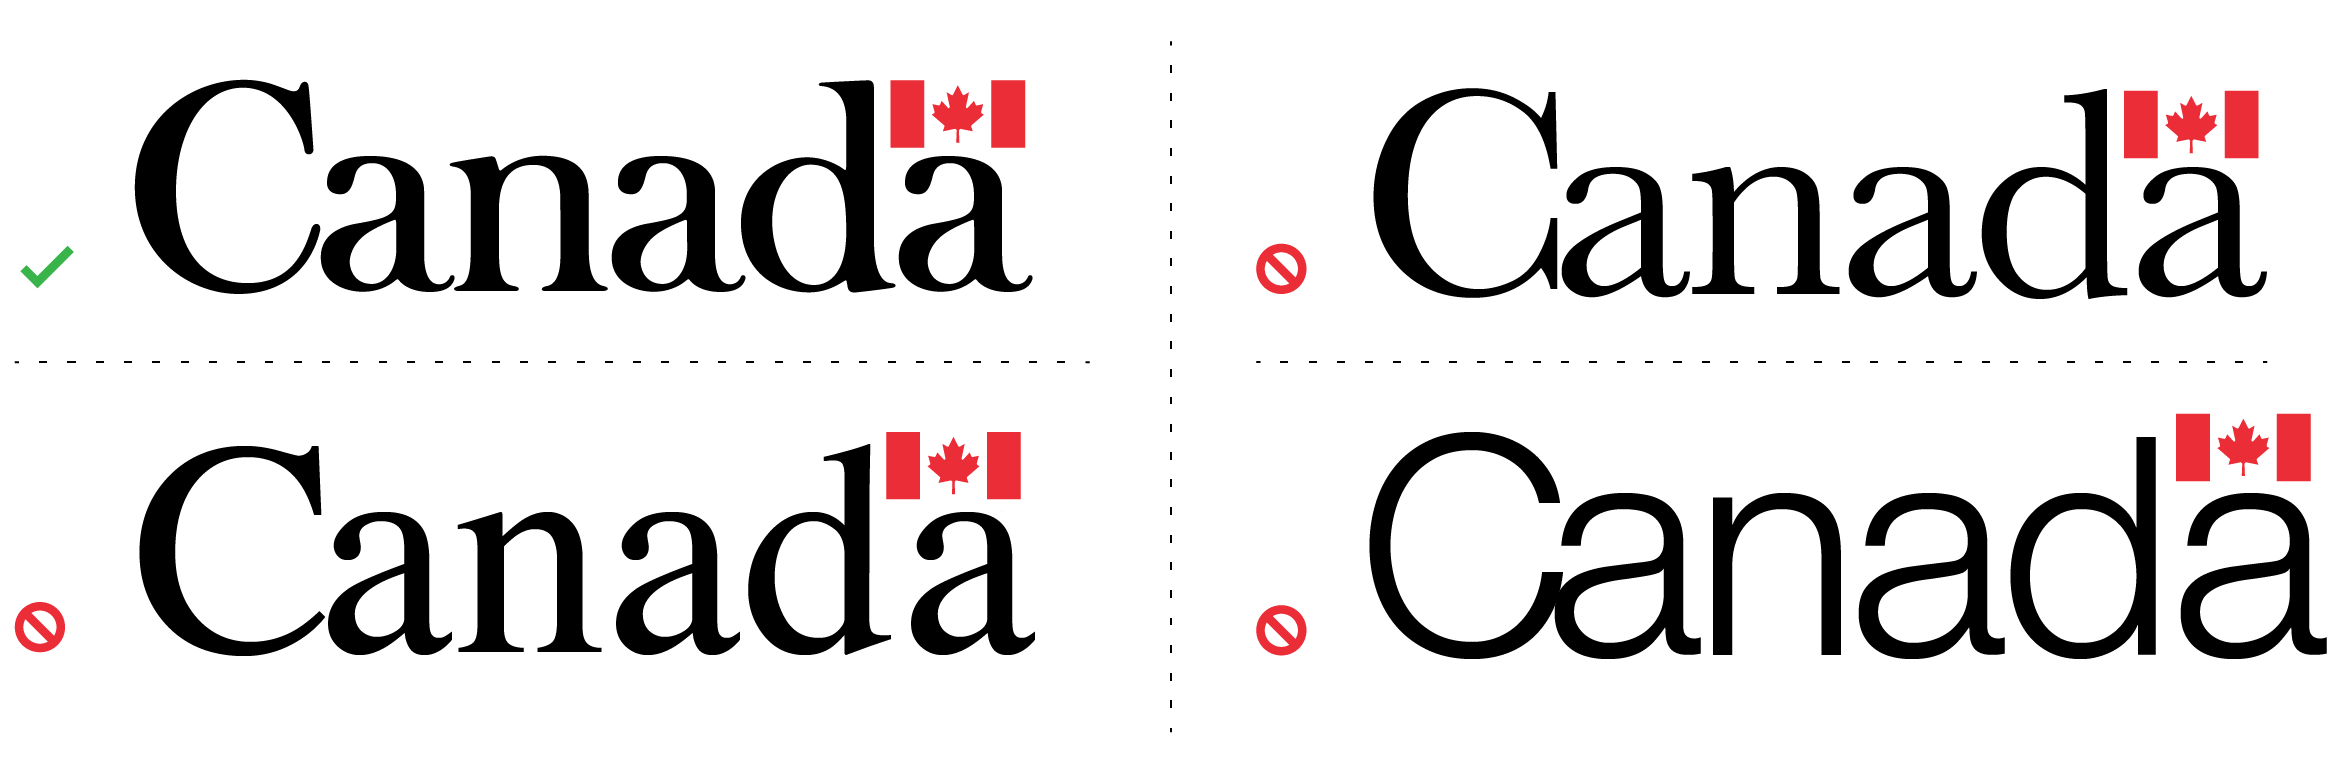 Logo Design Company in Canada | Graphic Design Services Toronto-cheohanoi.vn